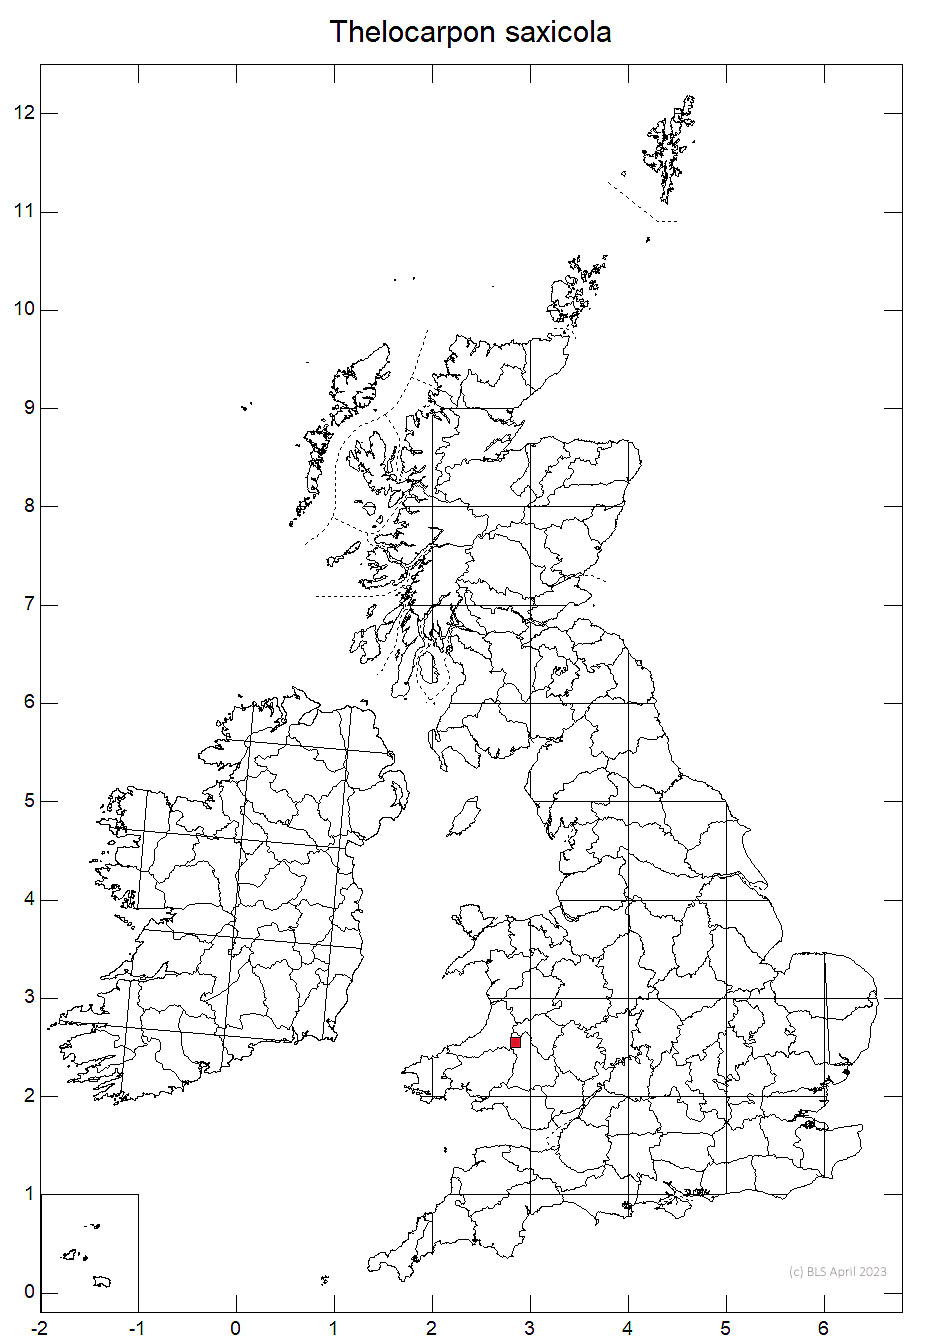 Thelocarpon saxicola 10km sq distribution map